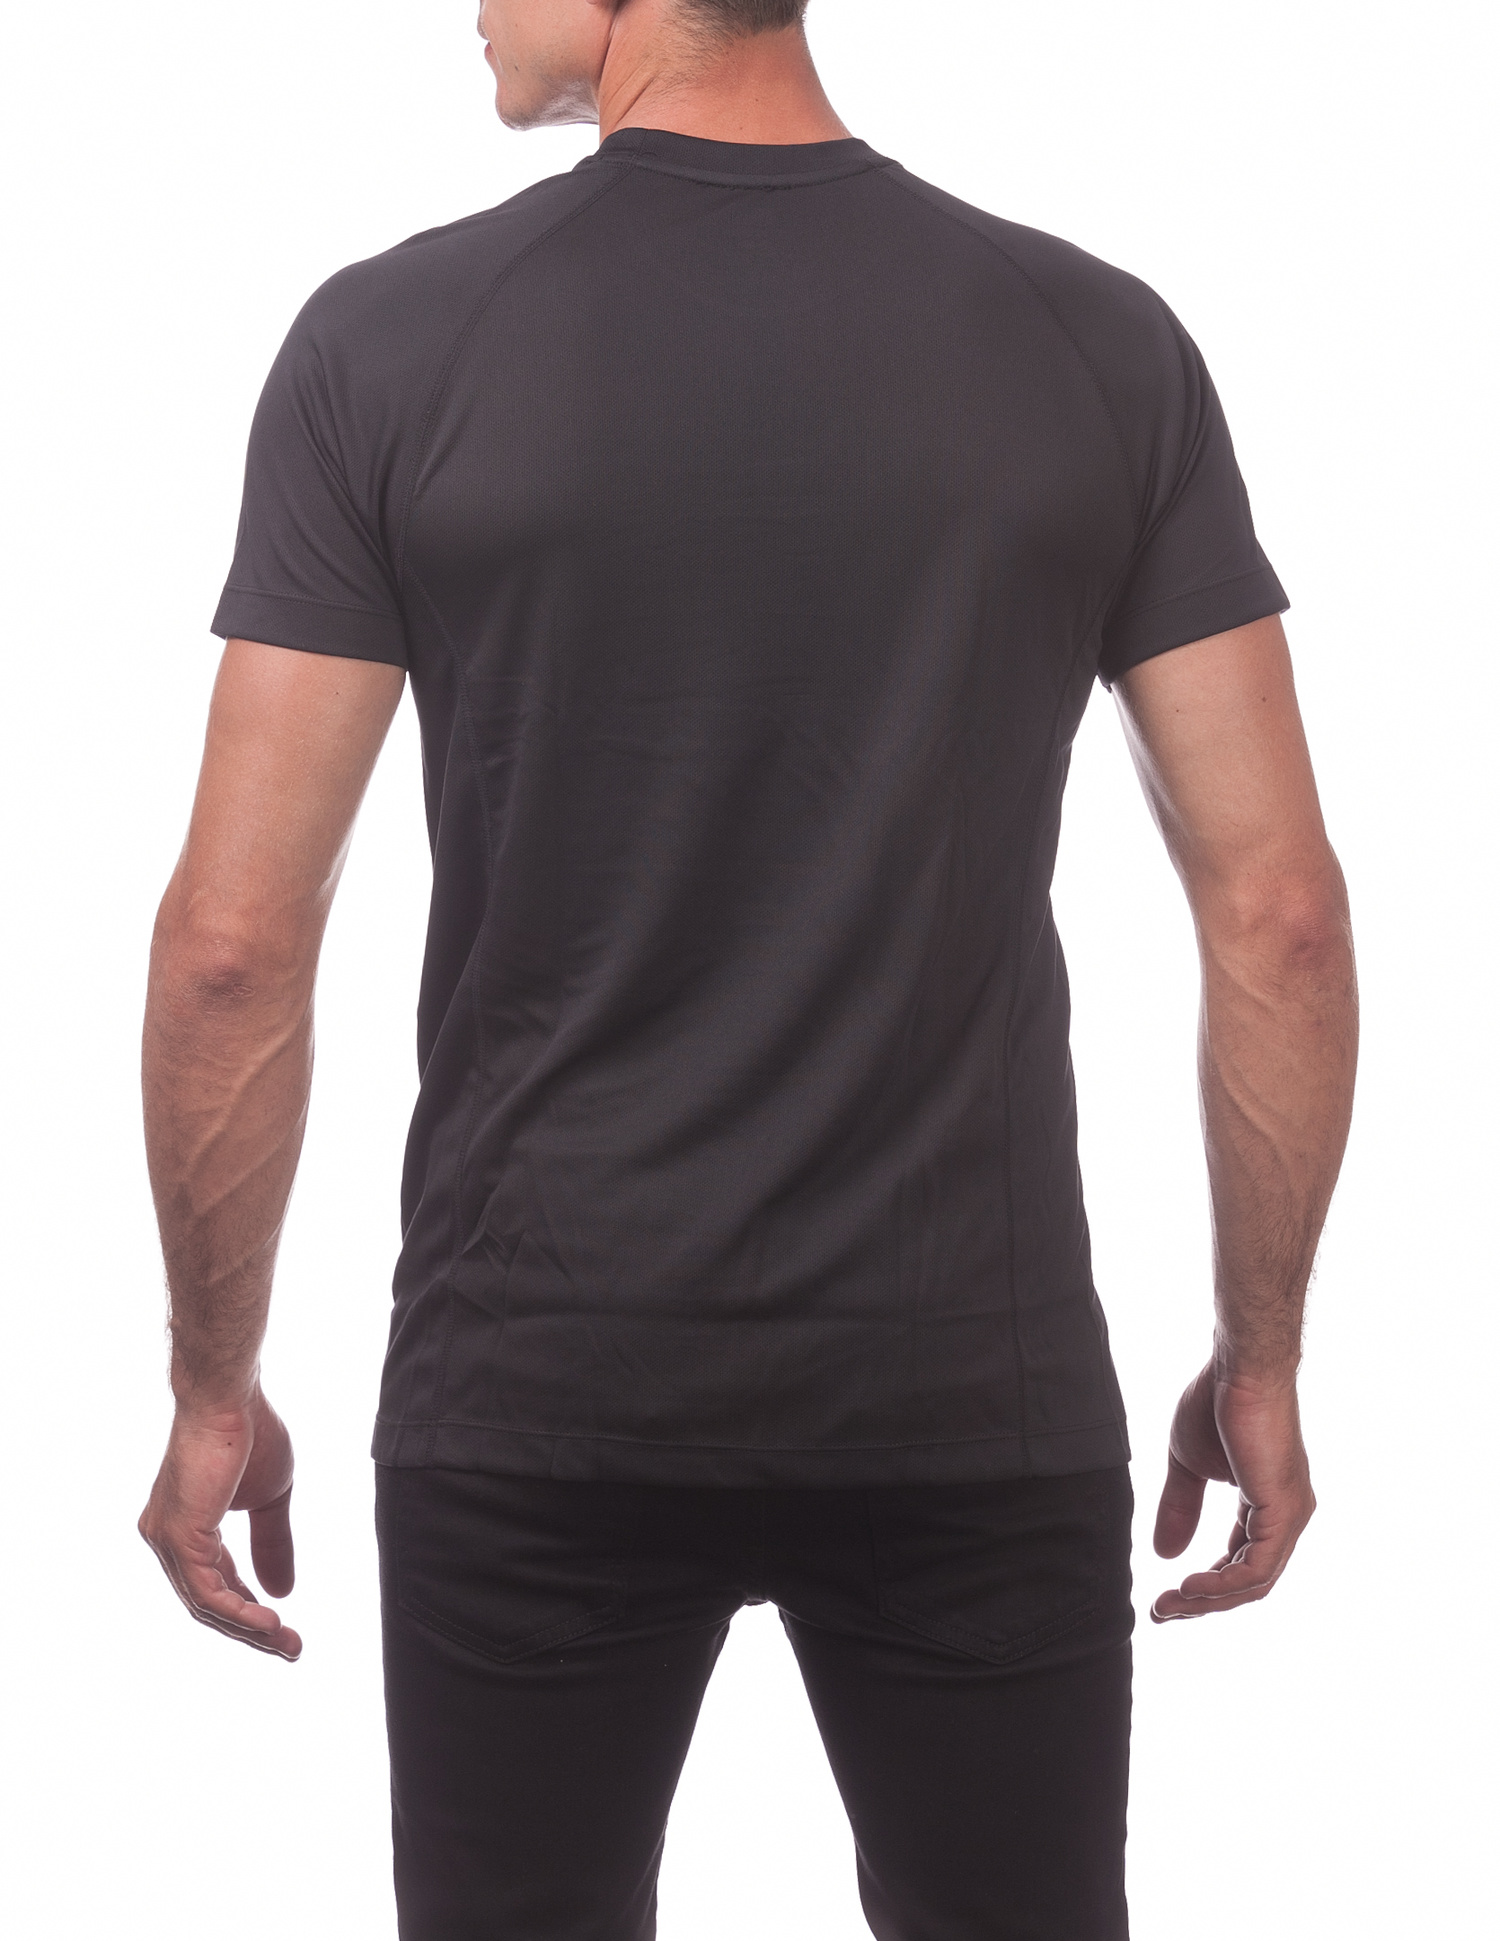 153 BLACK Performance DryPro Short Sleeve T-shirt - Shirts